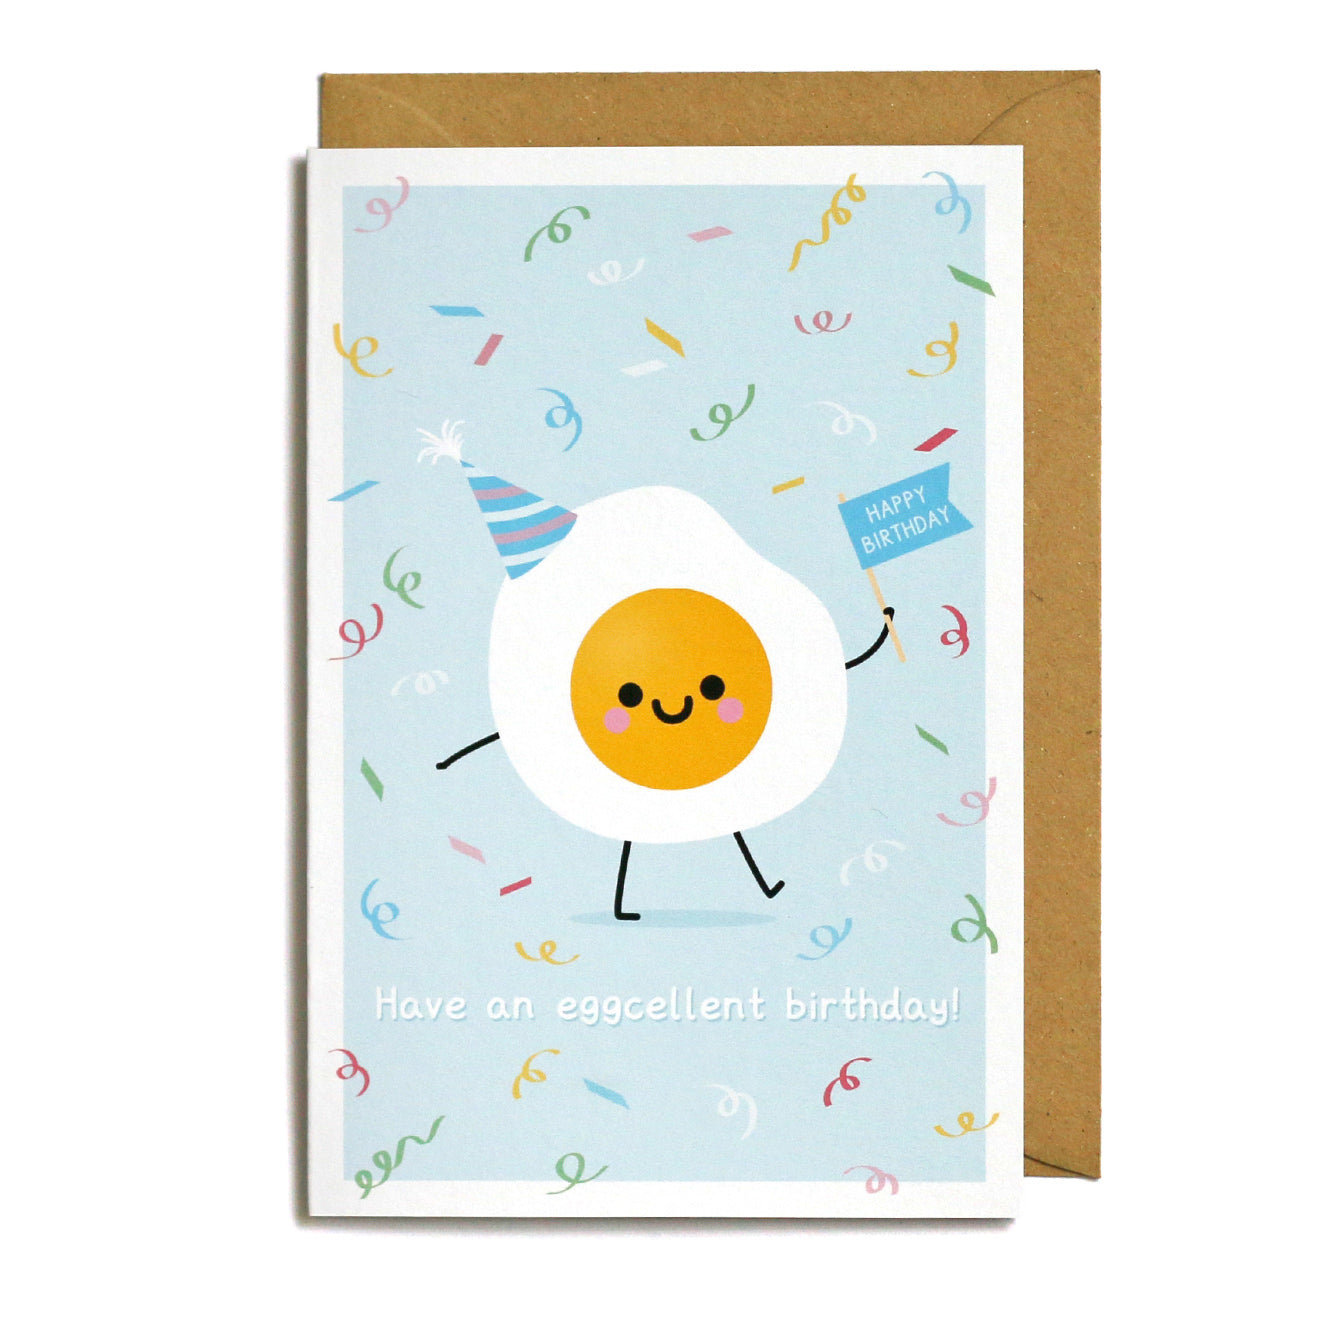 Kawaii fried egg birthday card, 'Have an eggcellent birthday', funny blue birthday card for him